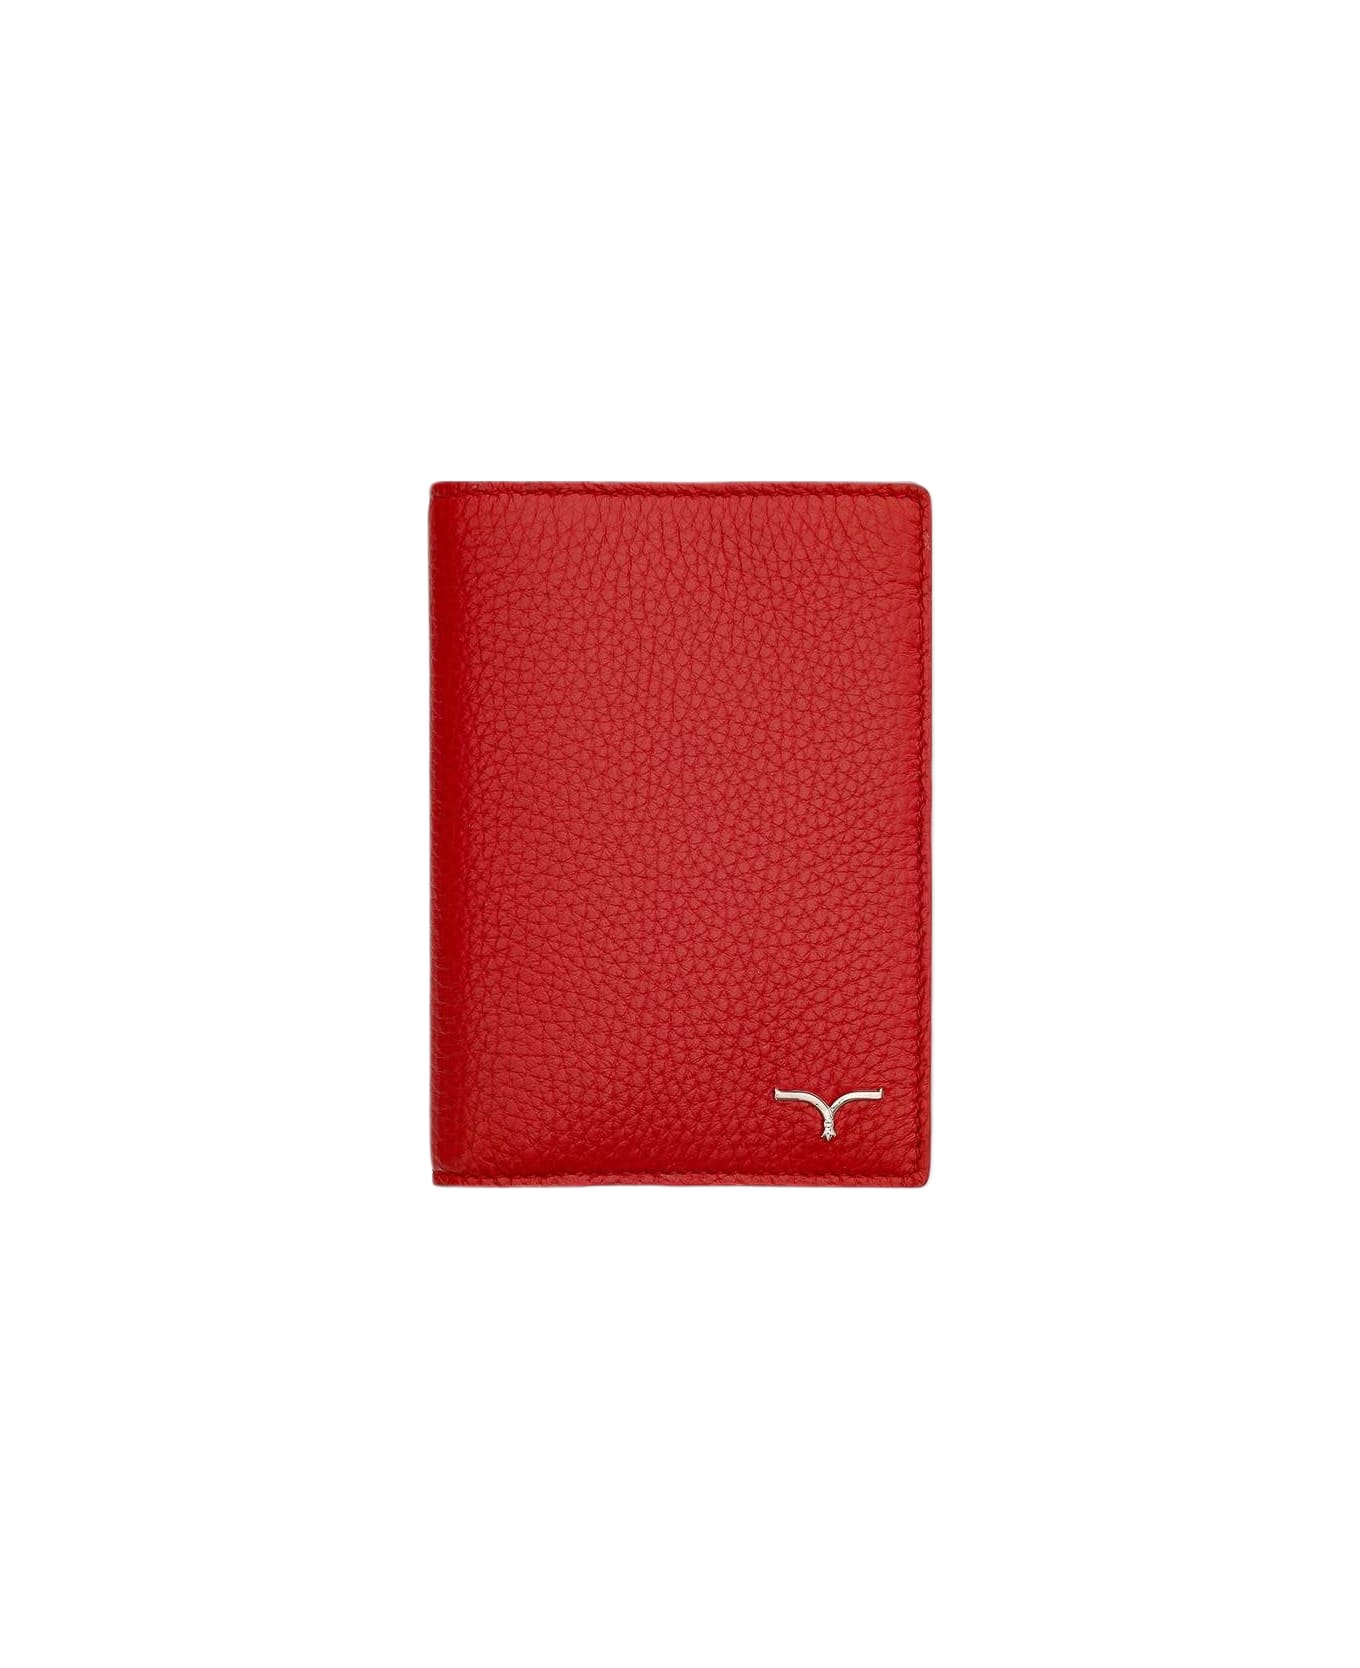 Larusmiani Passport Cover 'fiumicino' Wallet - Red 財布